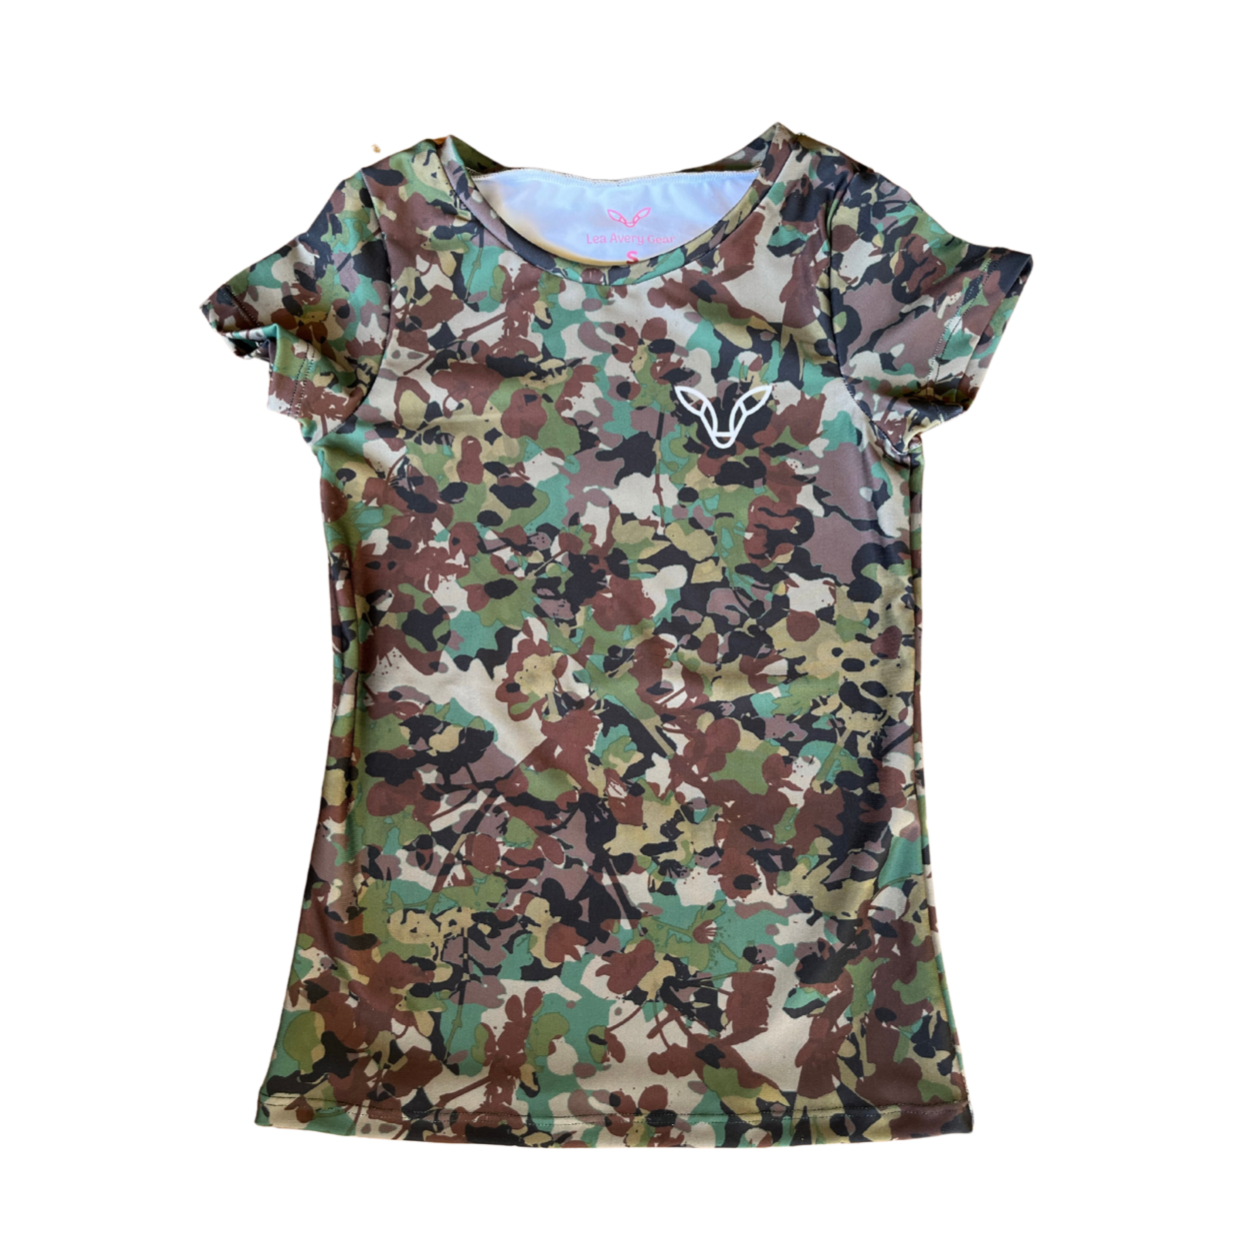 Darien Shirt - Girls' Short-Sleeved Camo Shirt – Lea Avery Gear